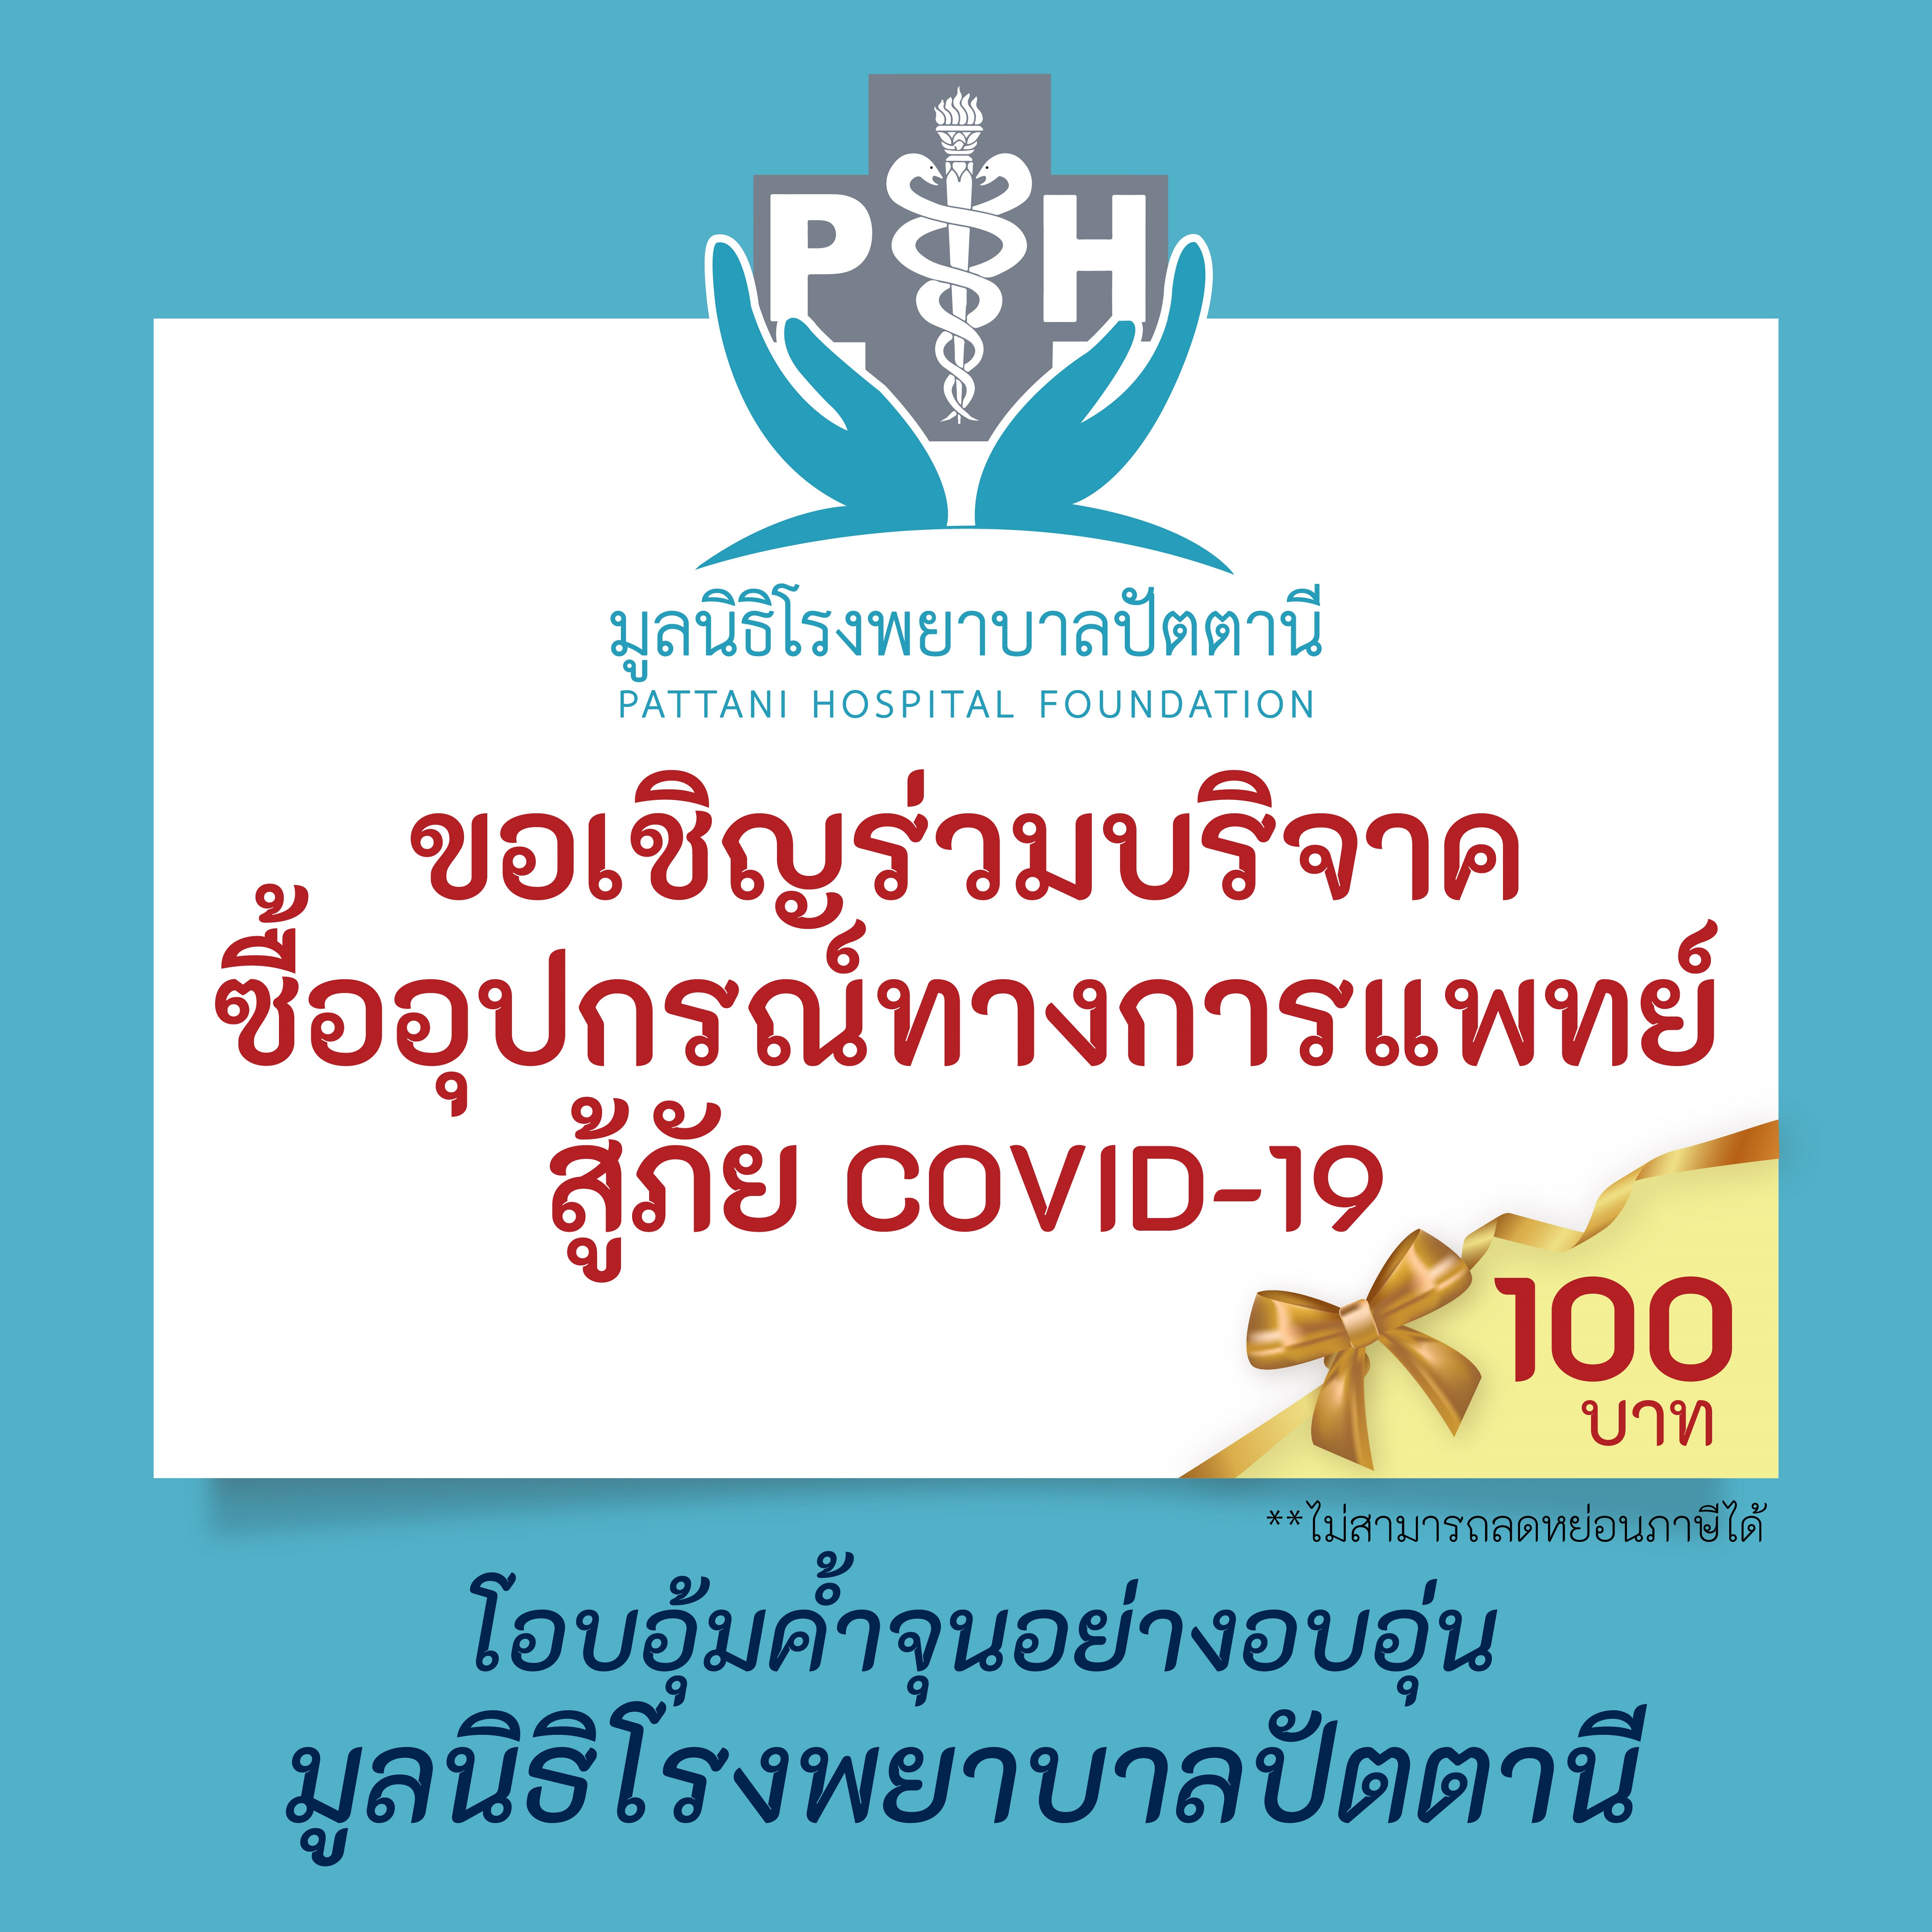 [E-Donation] โครงการป้องกันและช่วยเหลือสถานการณ์แพร่ระบาดของโควิด-19 (Covid-19) มูลนิธิโรงพยาบาลปัตตานี จำนวน 100 บาท